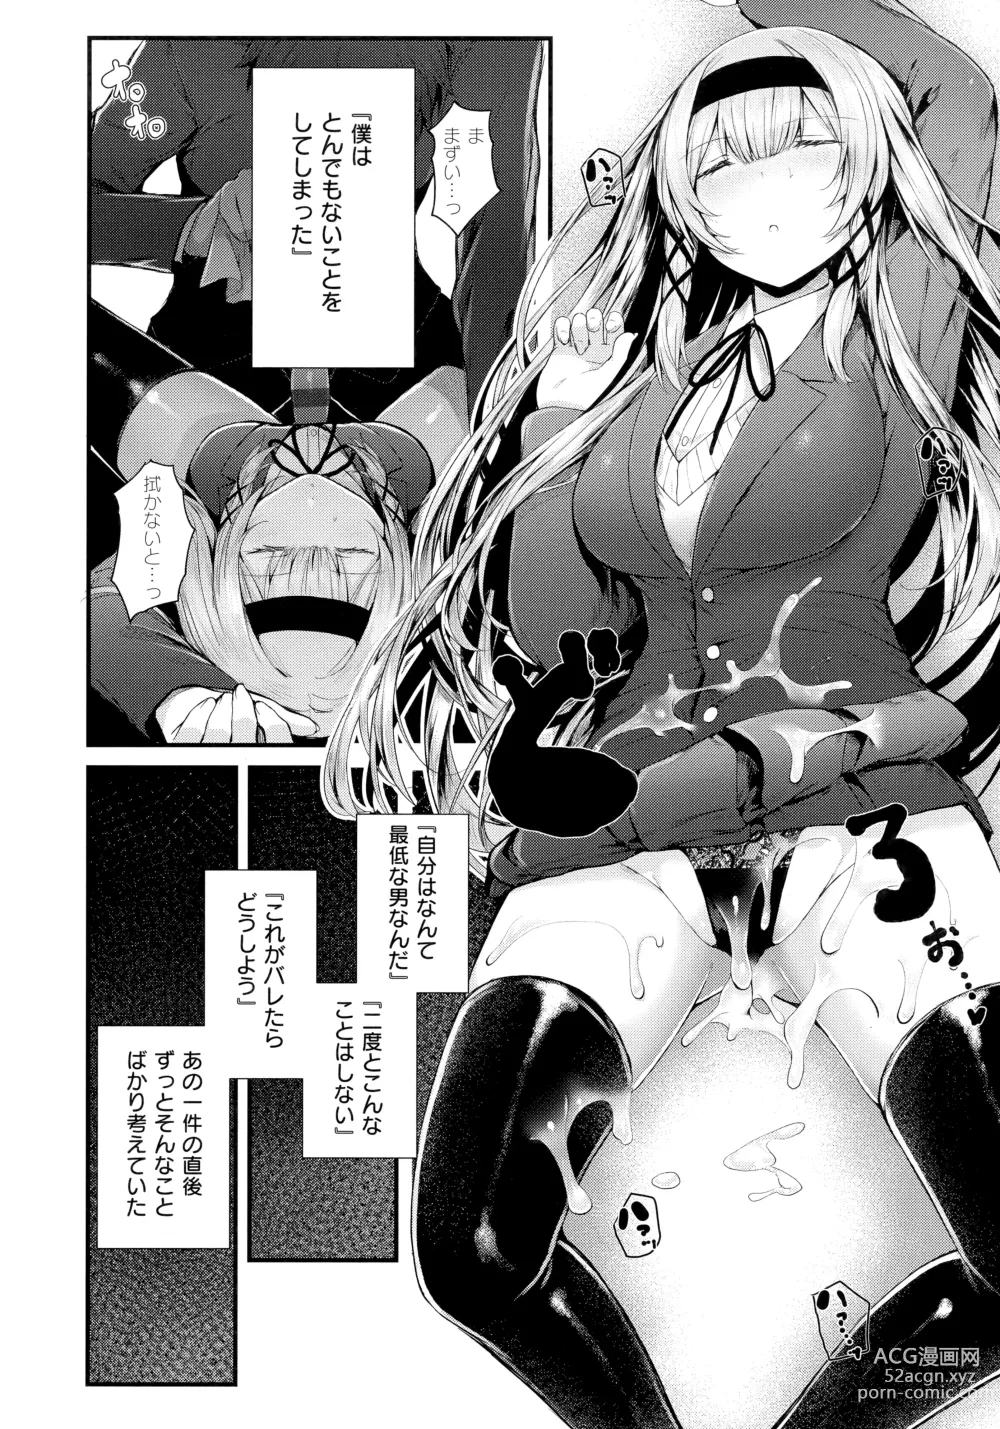 Page 14 of manga Namaiki Love Hole + Melonbooks Kounyu Tokuten + Toranoana Kounyu Tokuten